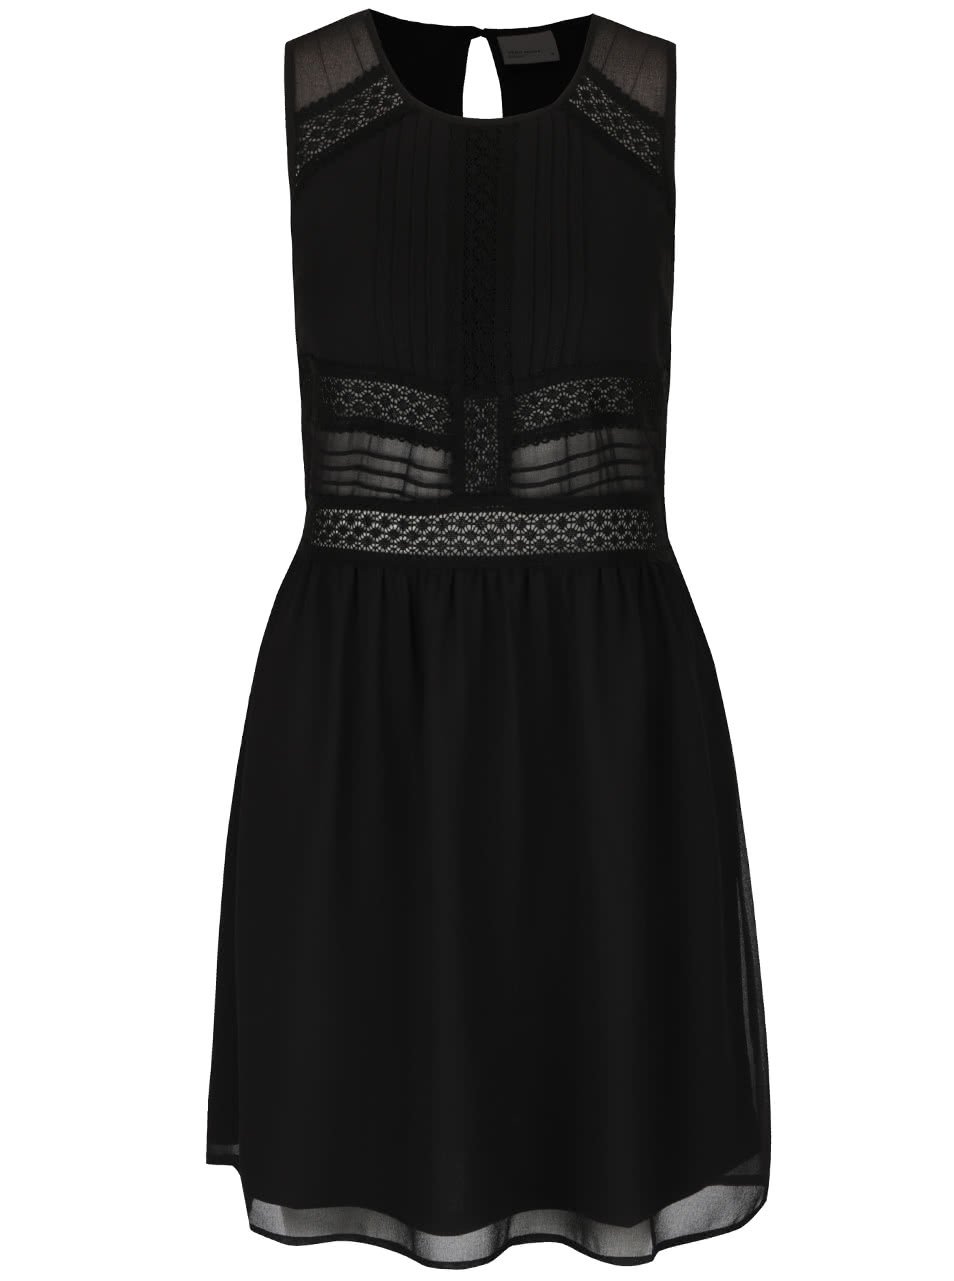 Černé šaty s krajkovými detaily Vero Moda Ladylike